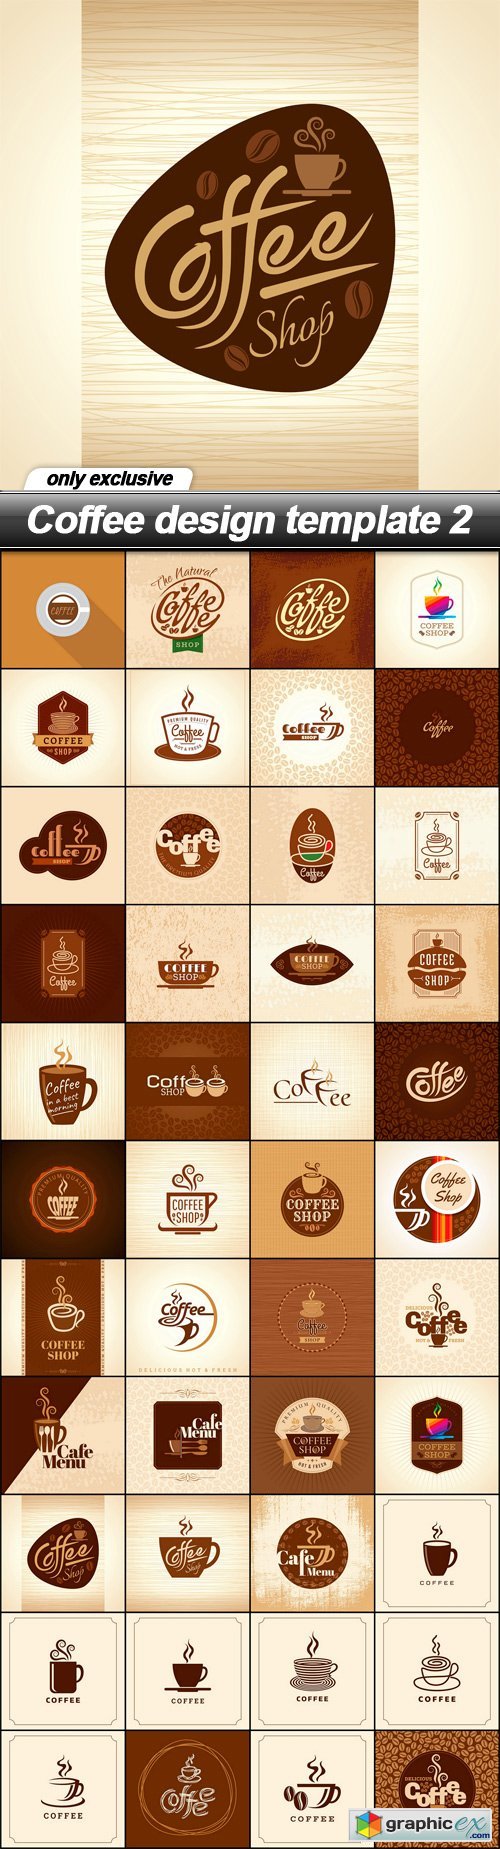 Coffee design template 2 - 44 EPS